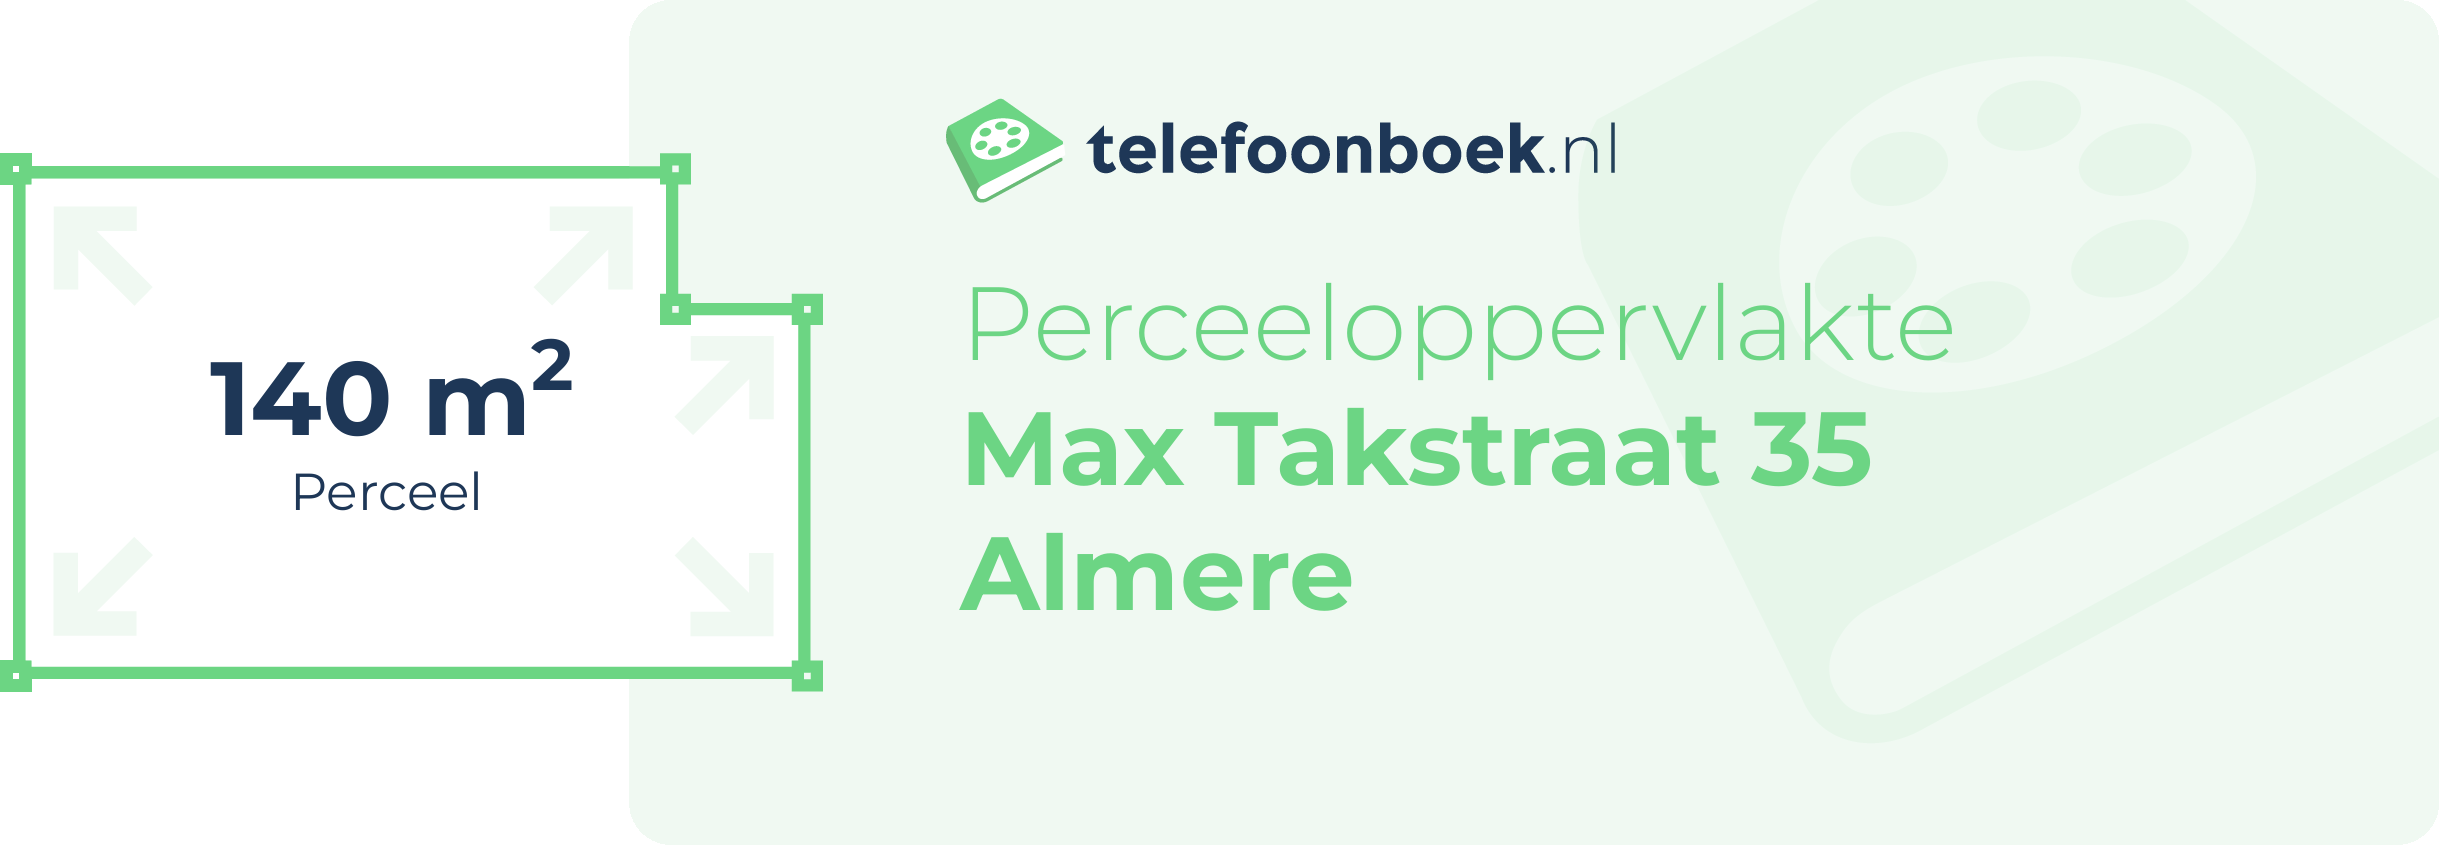 Perceeloppervlakte Max Takstraat 35 Almere